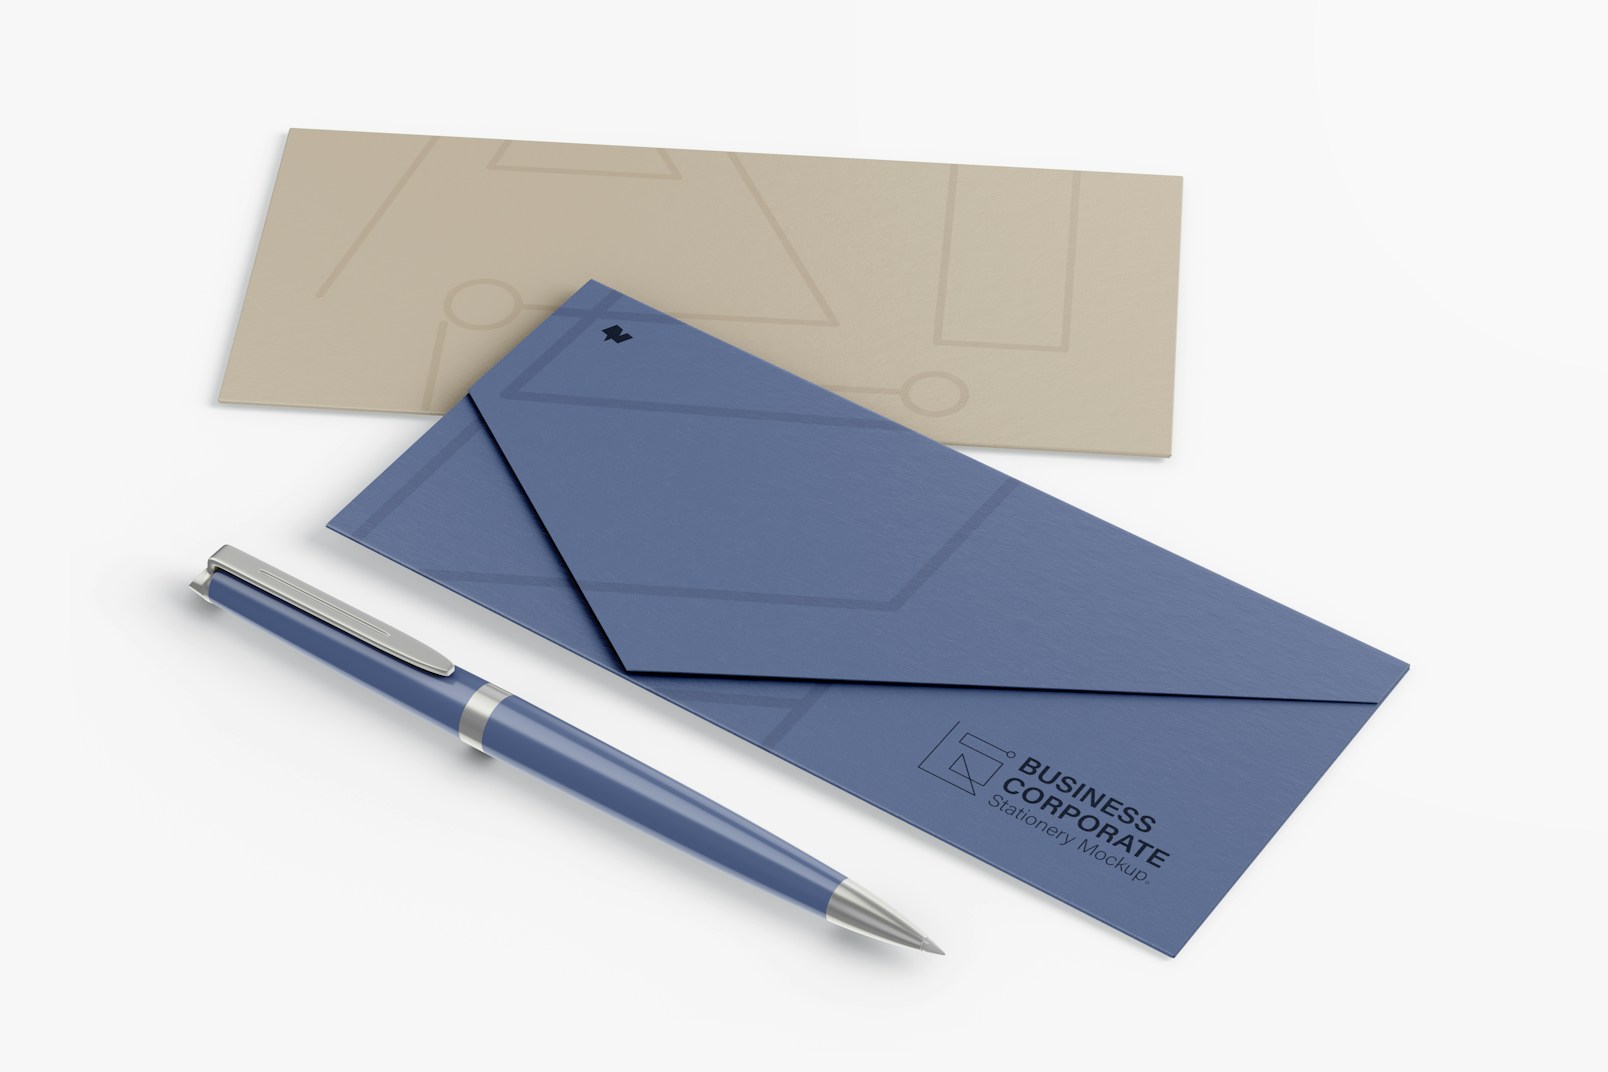 Rectangular Paper Envelopes Mockup, with Pen